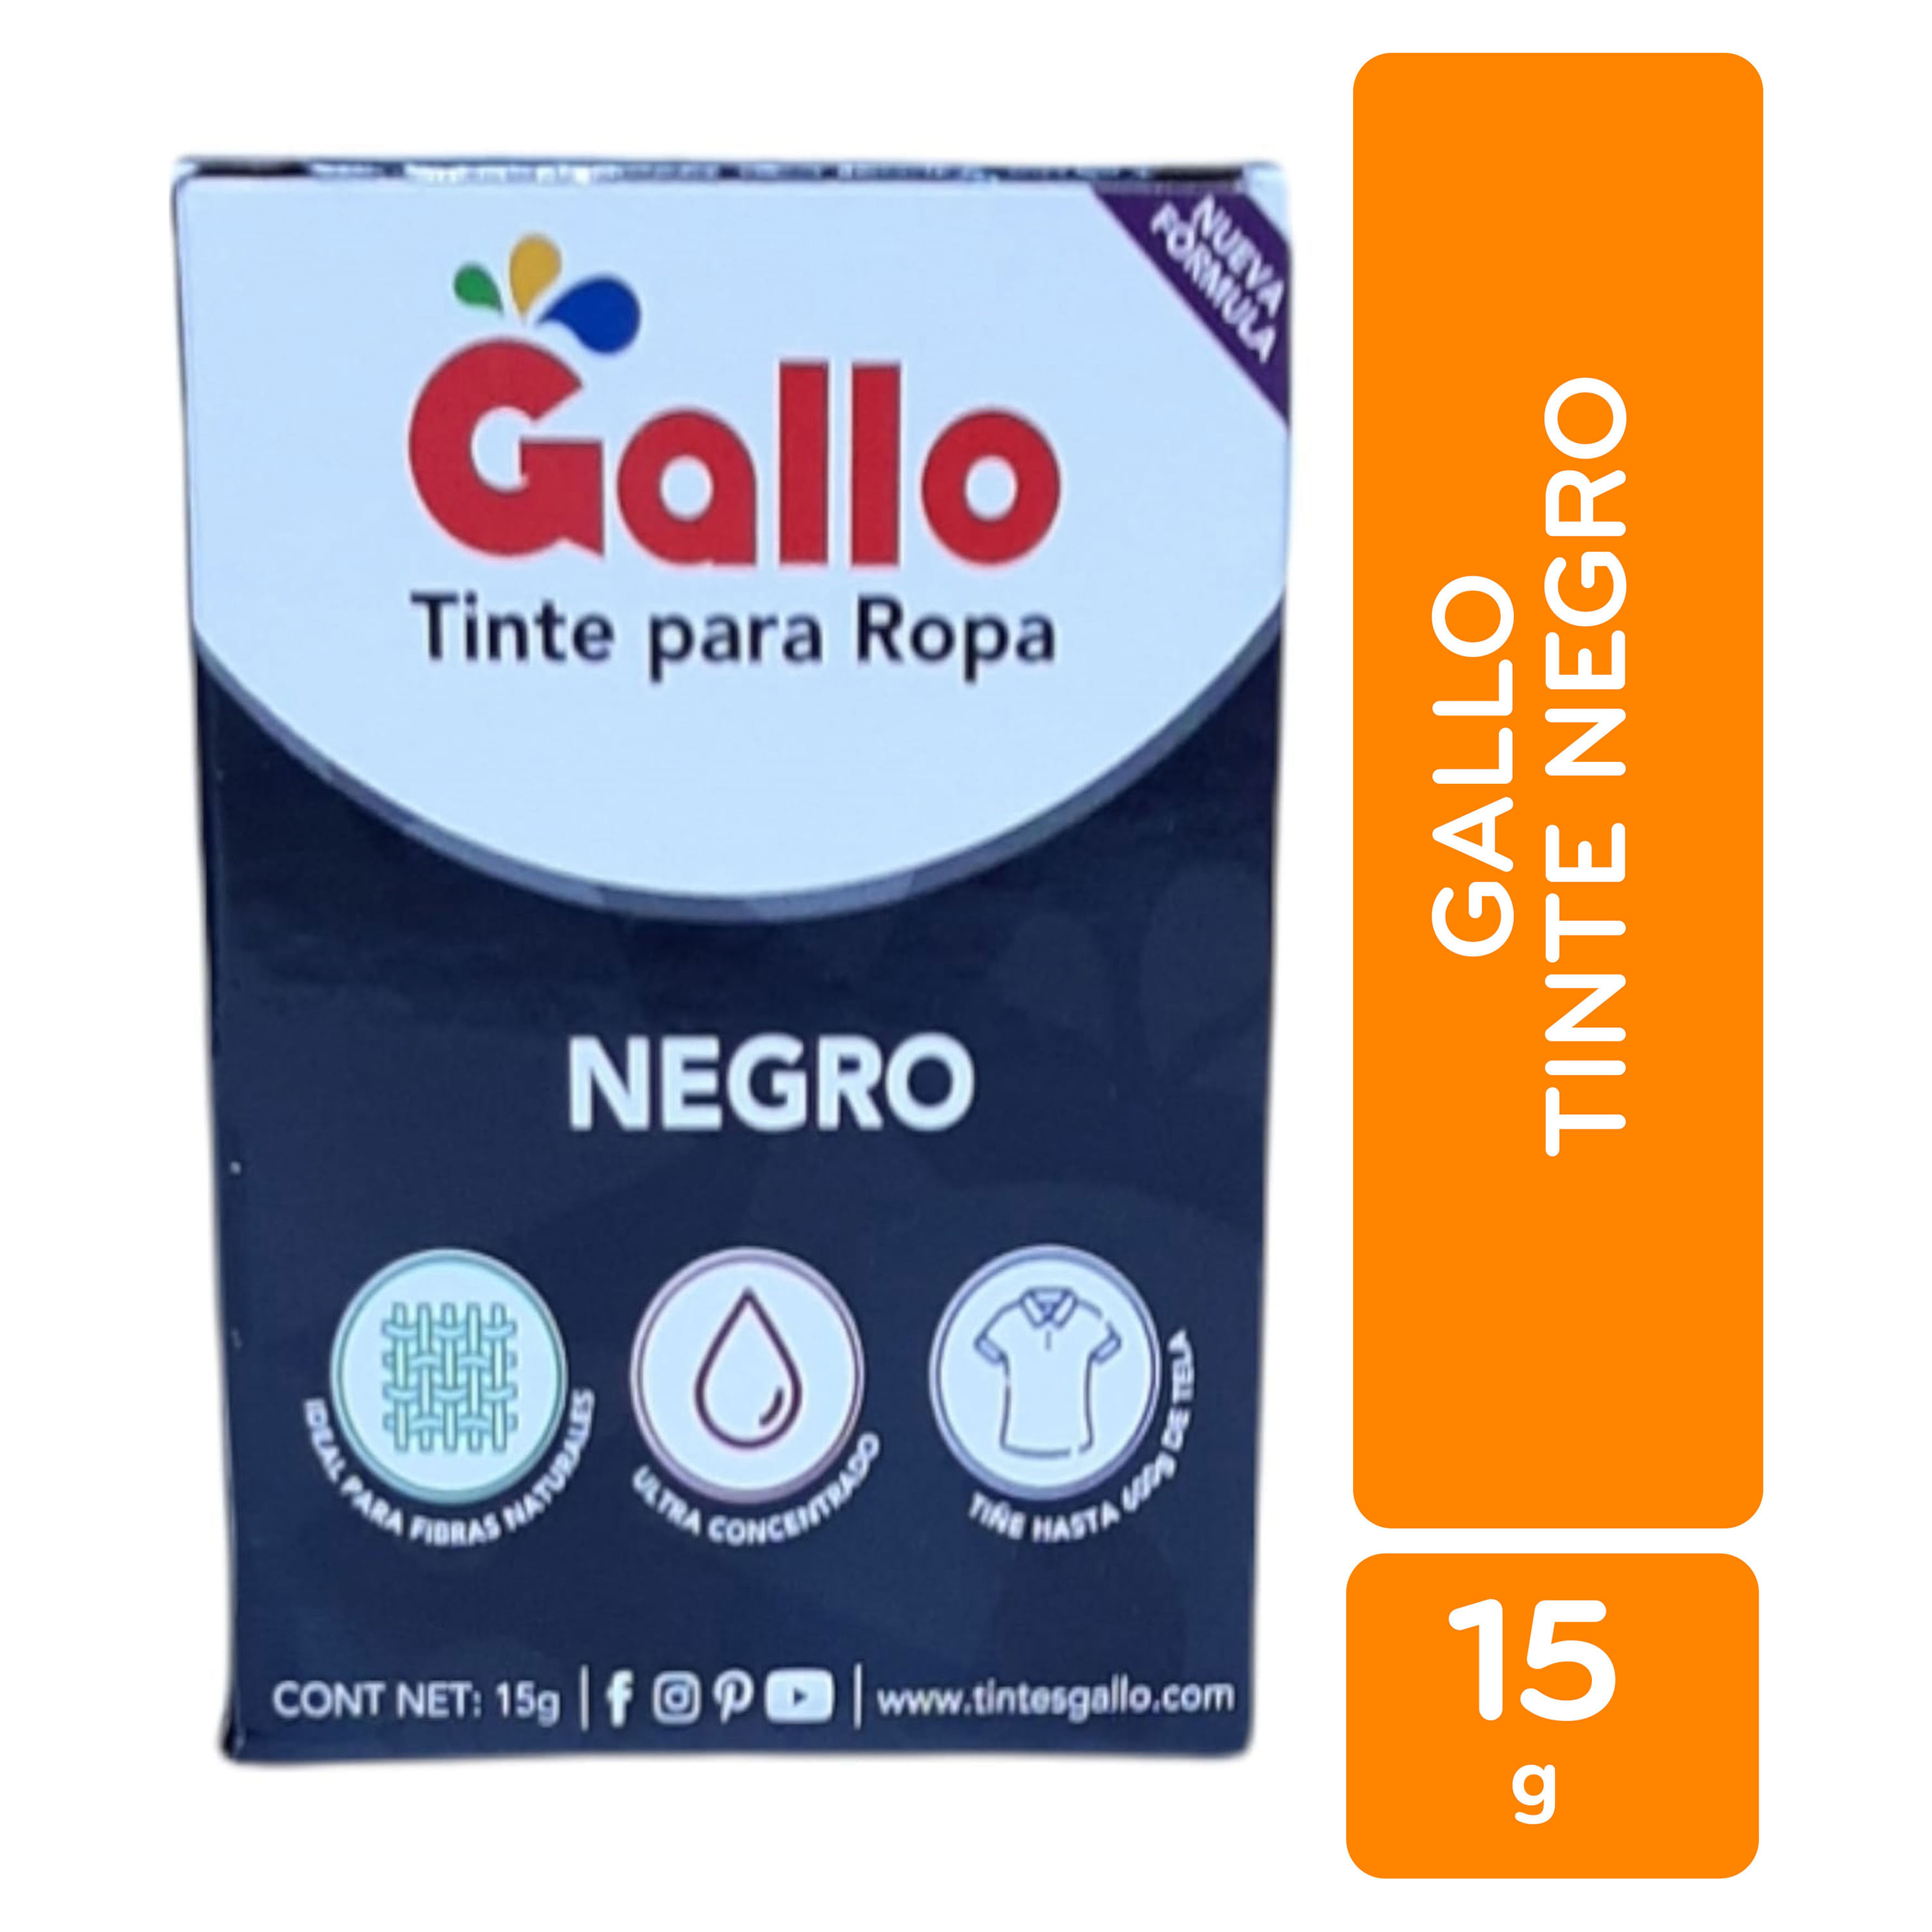 Seguro lino ético Comprar Tinte Gallo Para Ropa Color Negro - 15gr | Walmart Honduras